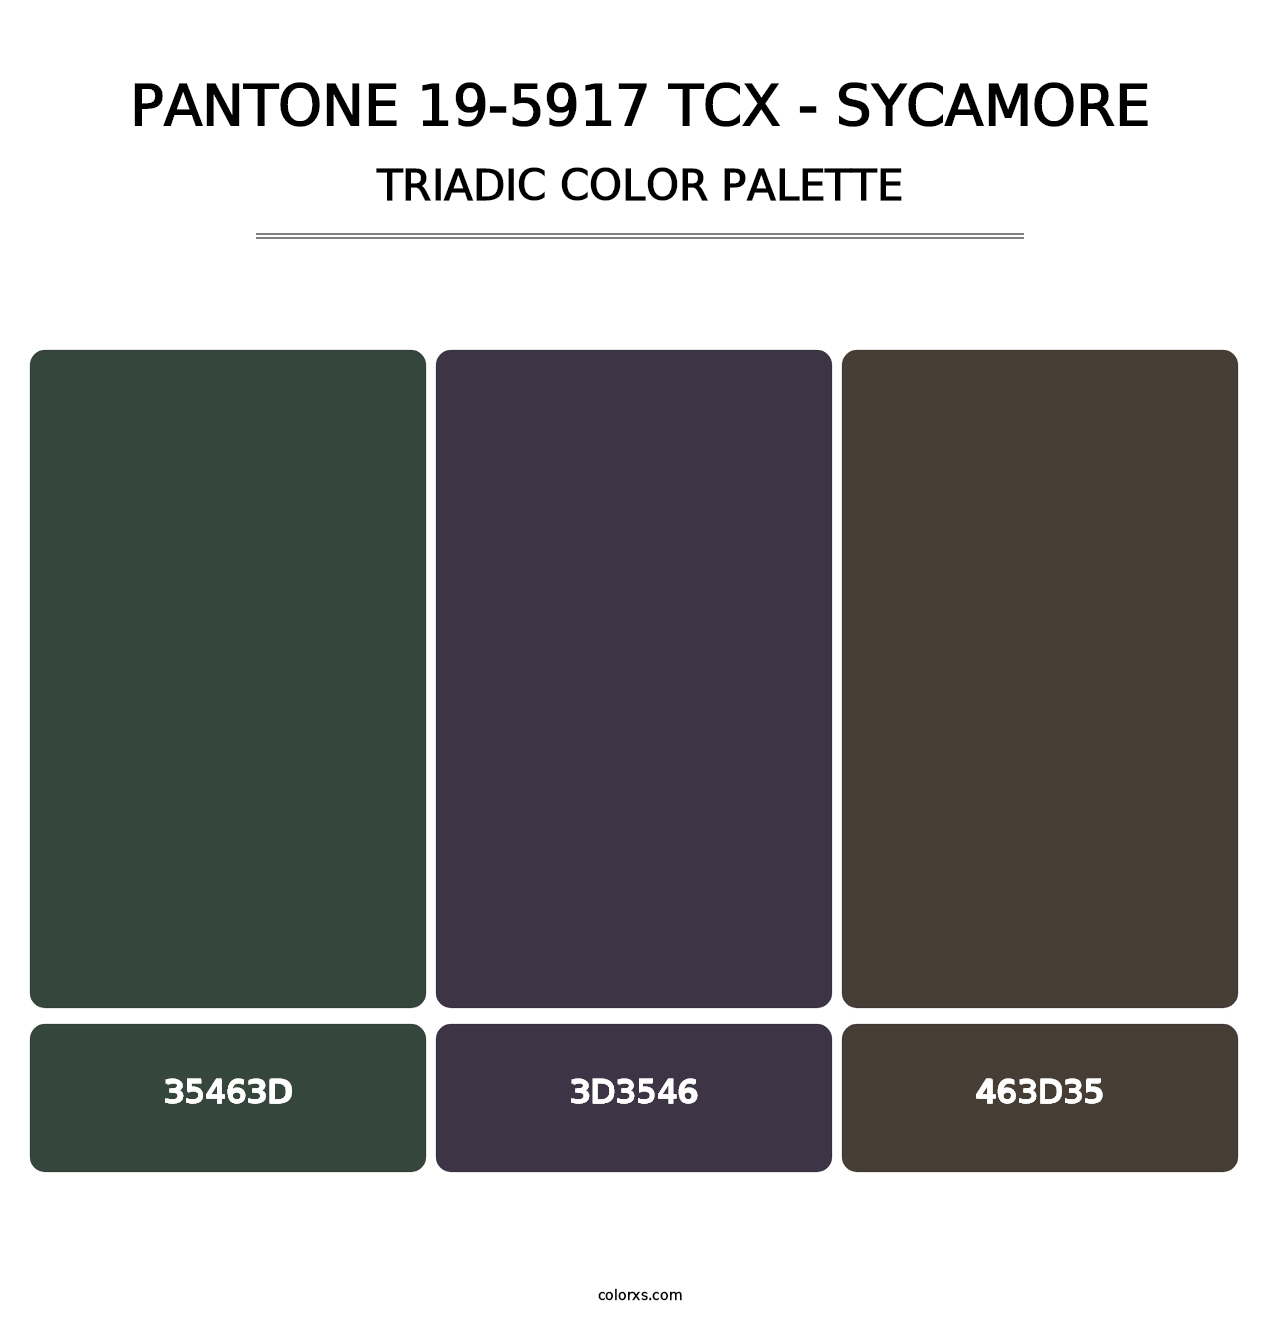 PANTONE 19-5917 TCX - Sycamore - Triadic Color Palette